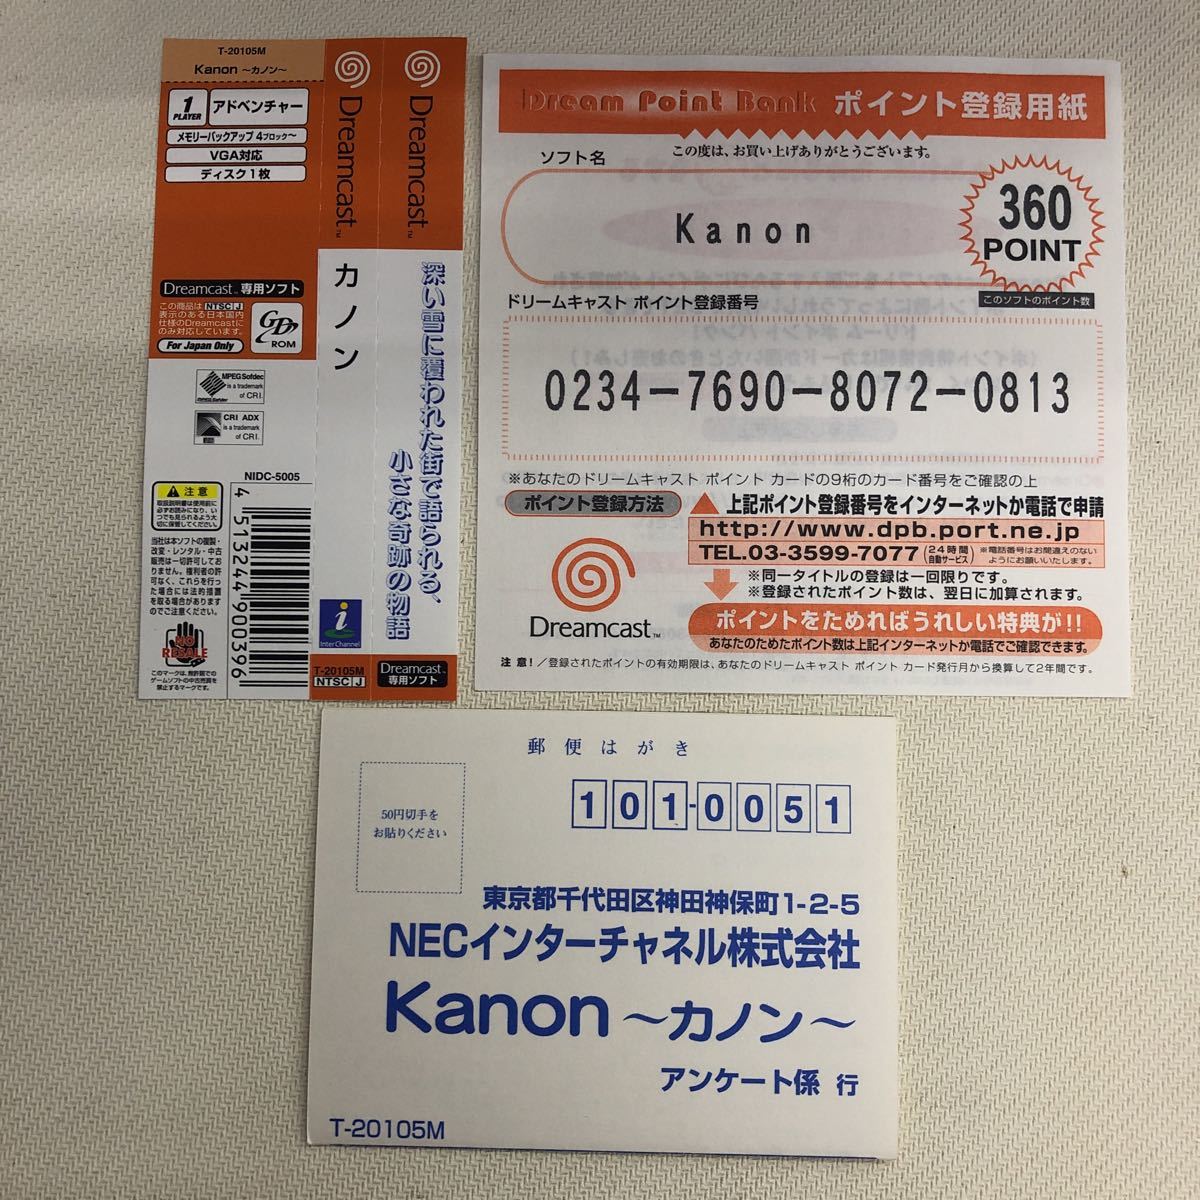  Dreamcast ka non kanon beautiful goods obi leaf document.